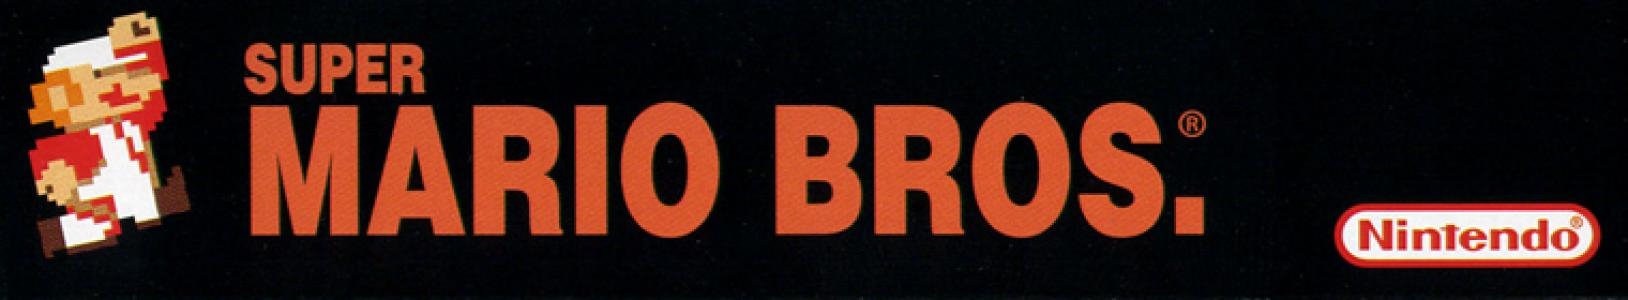 Super Mario Bros. banner